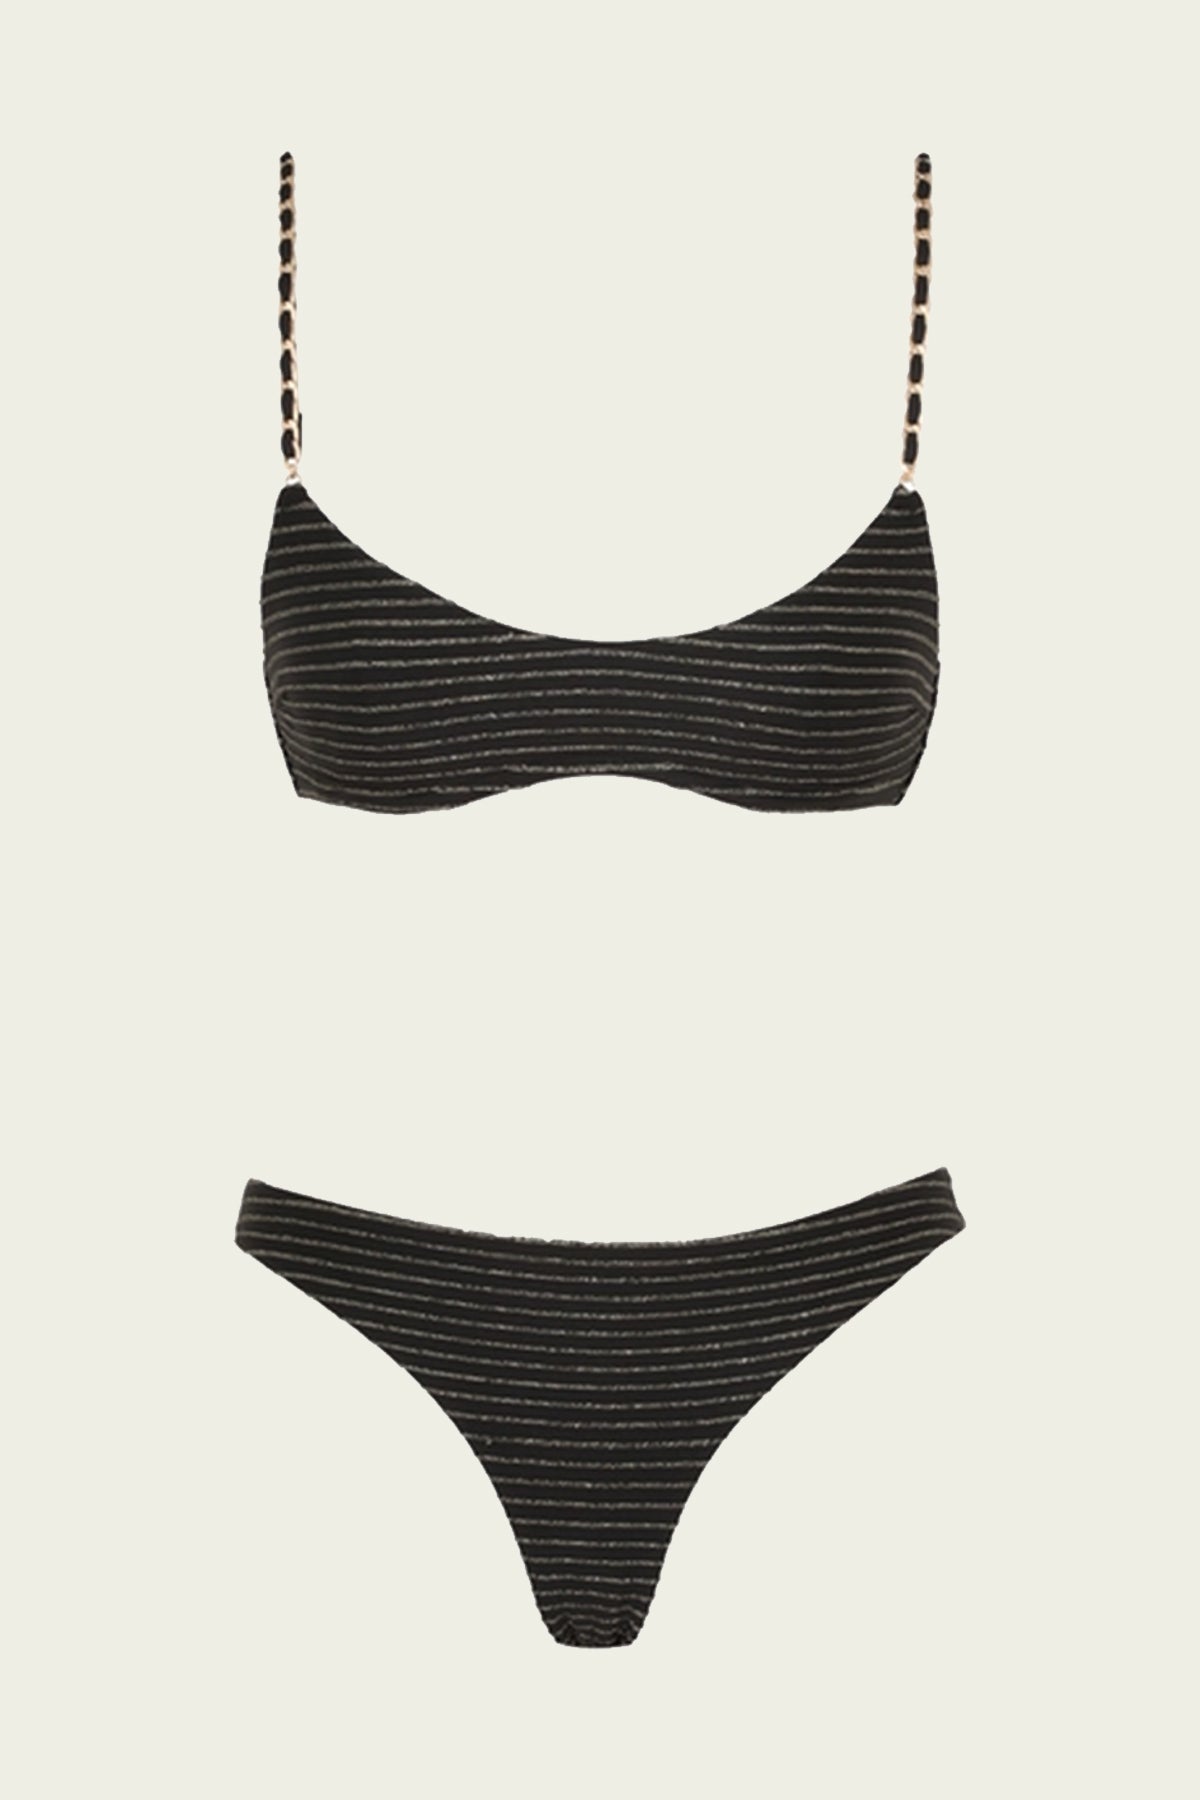 Waverly Chain Bikini Set in Black Gold - shop-olivia.com